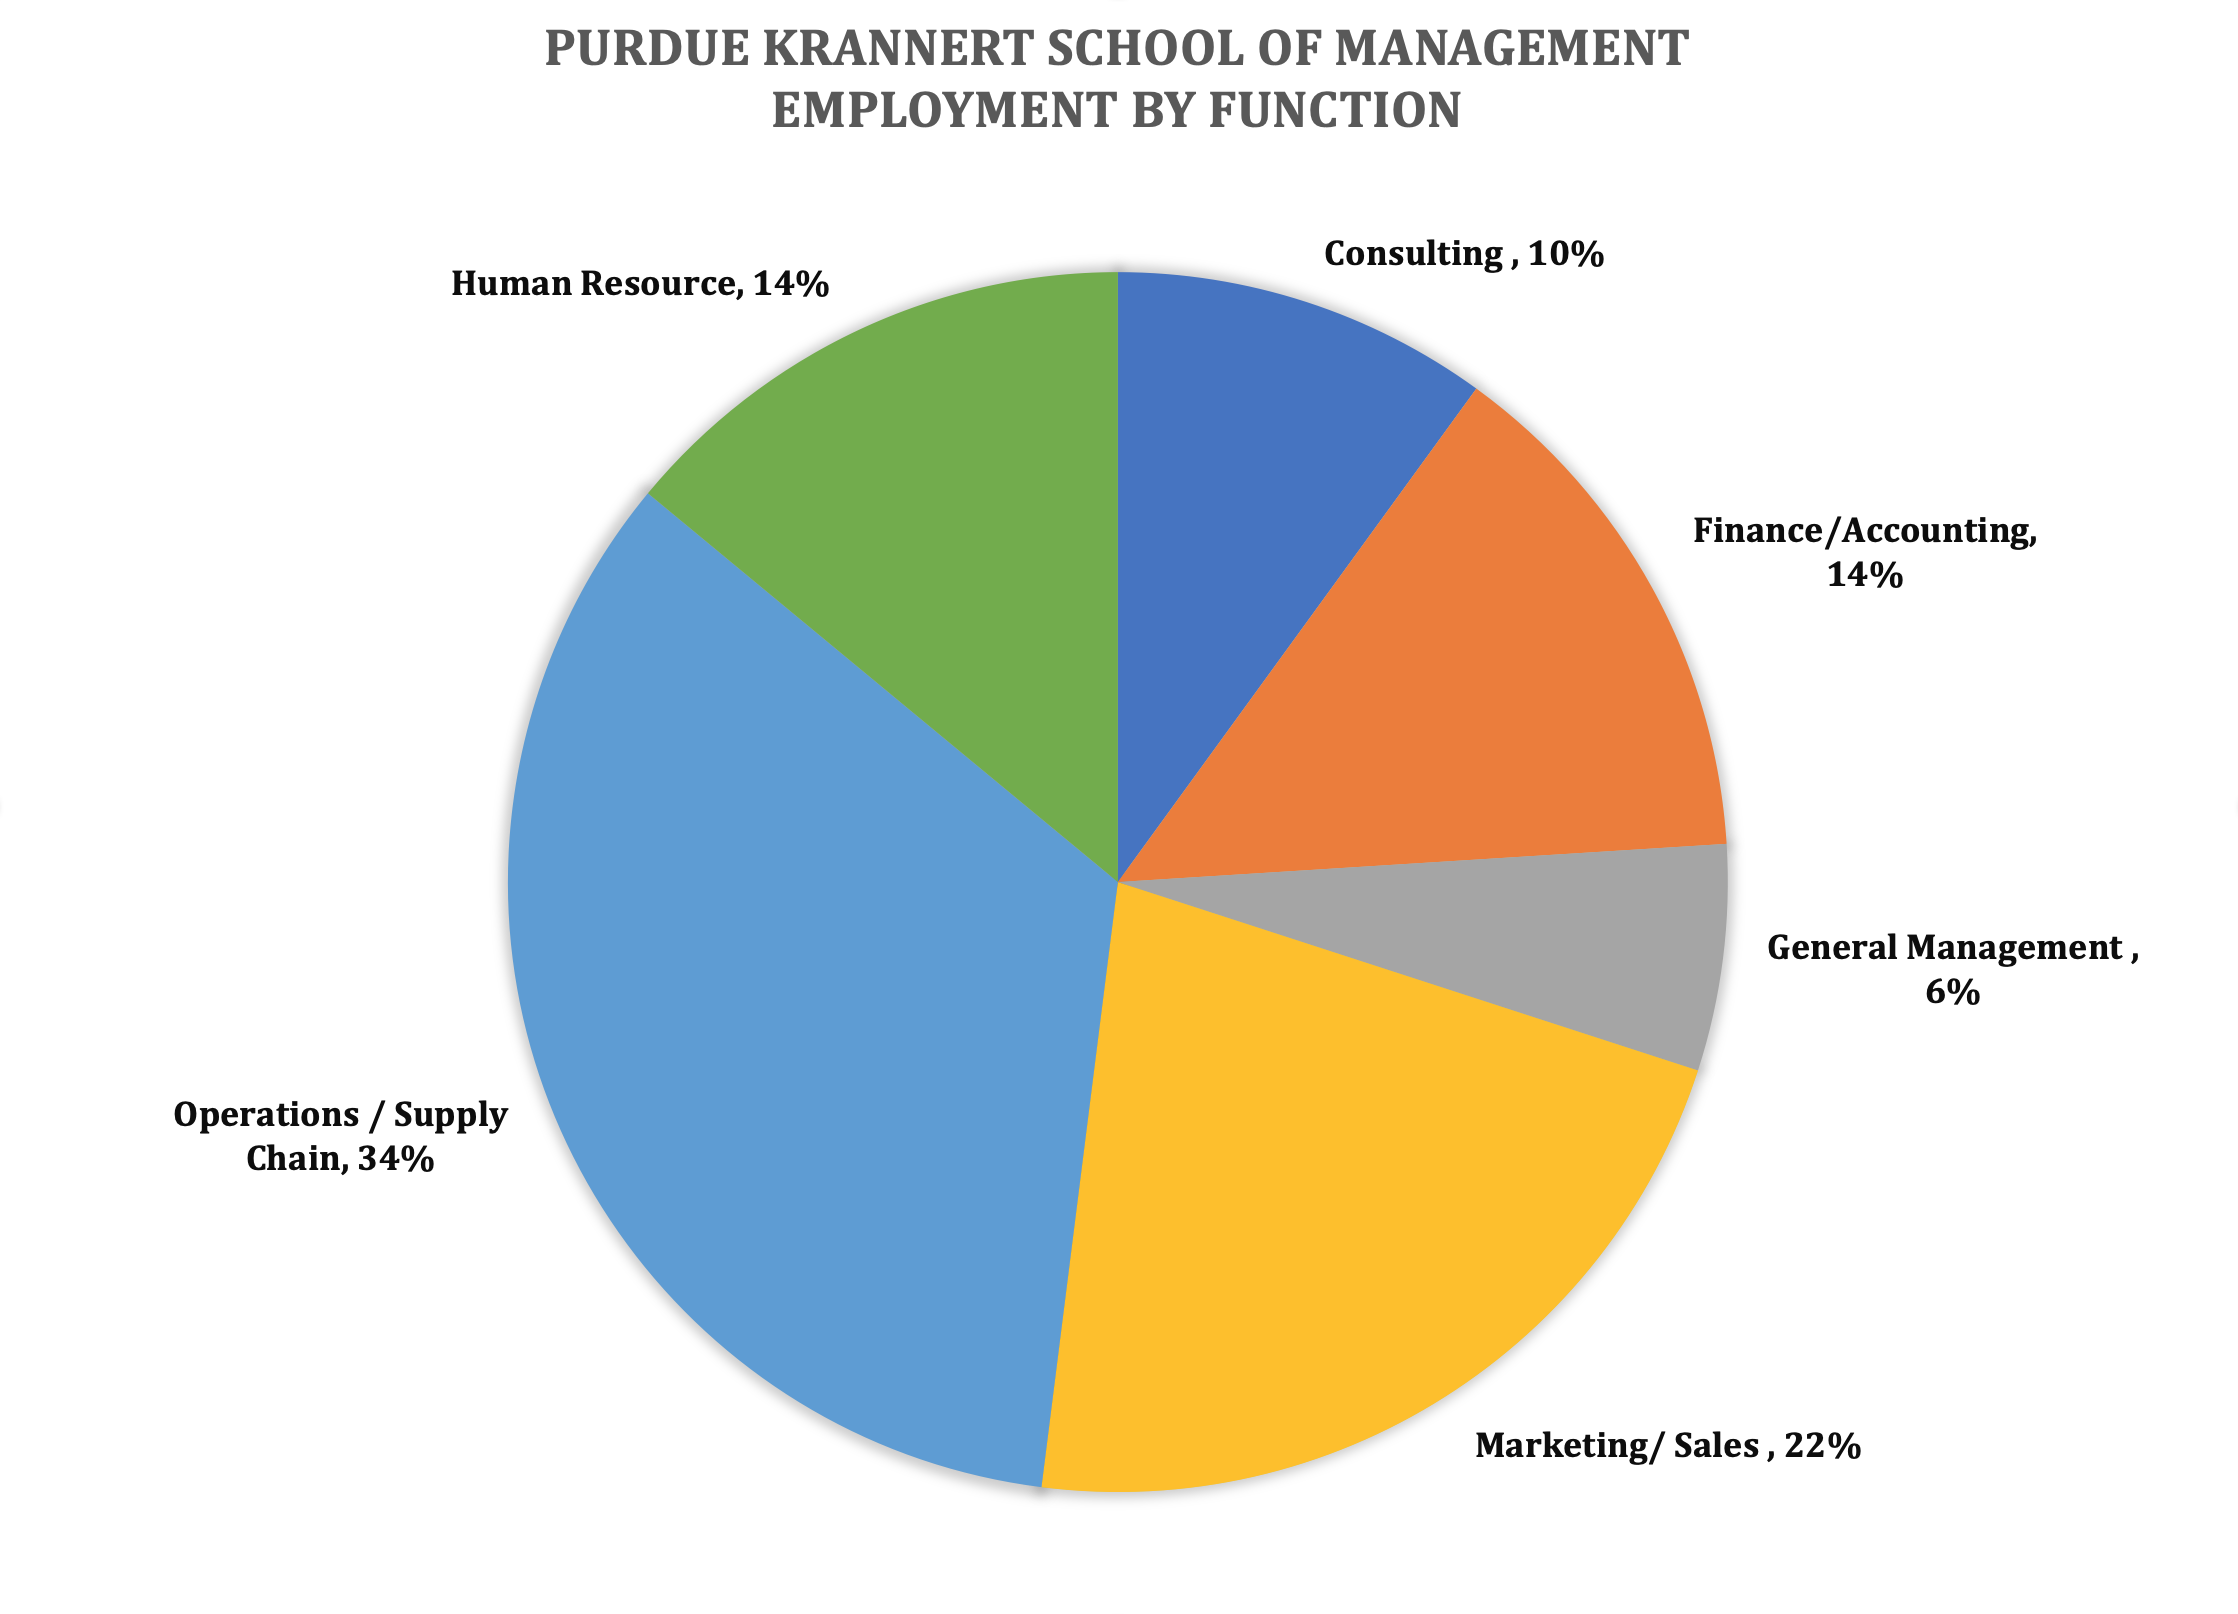 Purdue Krannert School of Management - Employment by Function